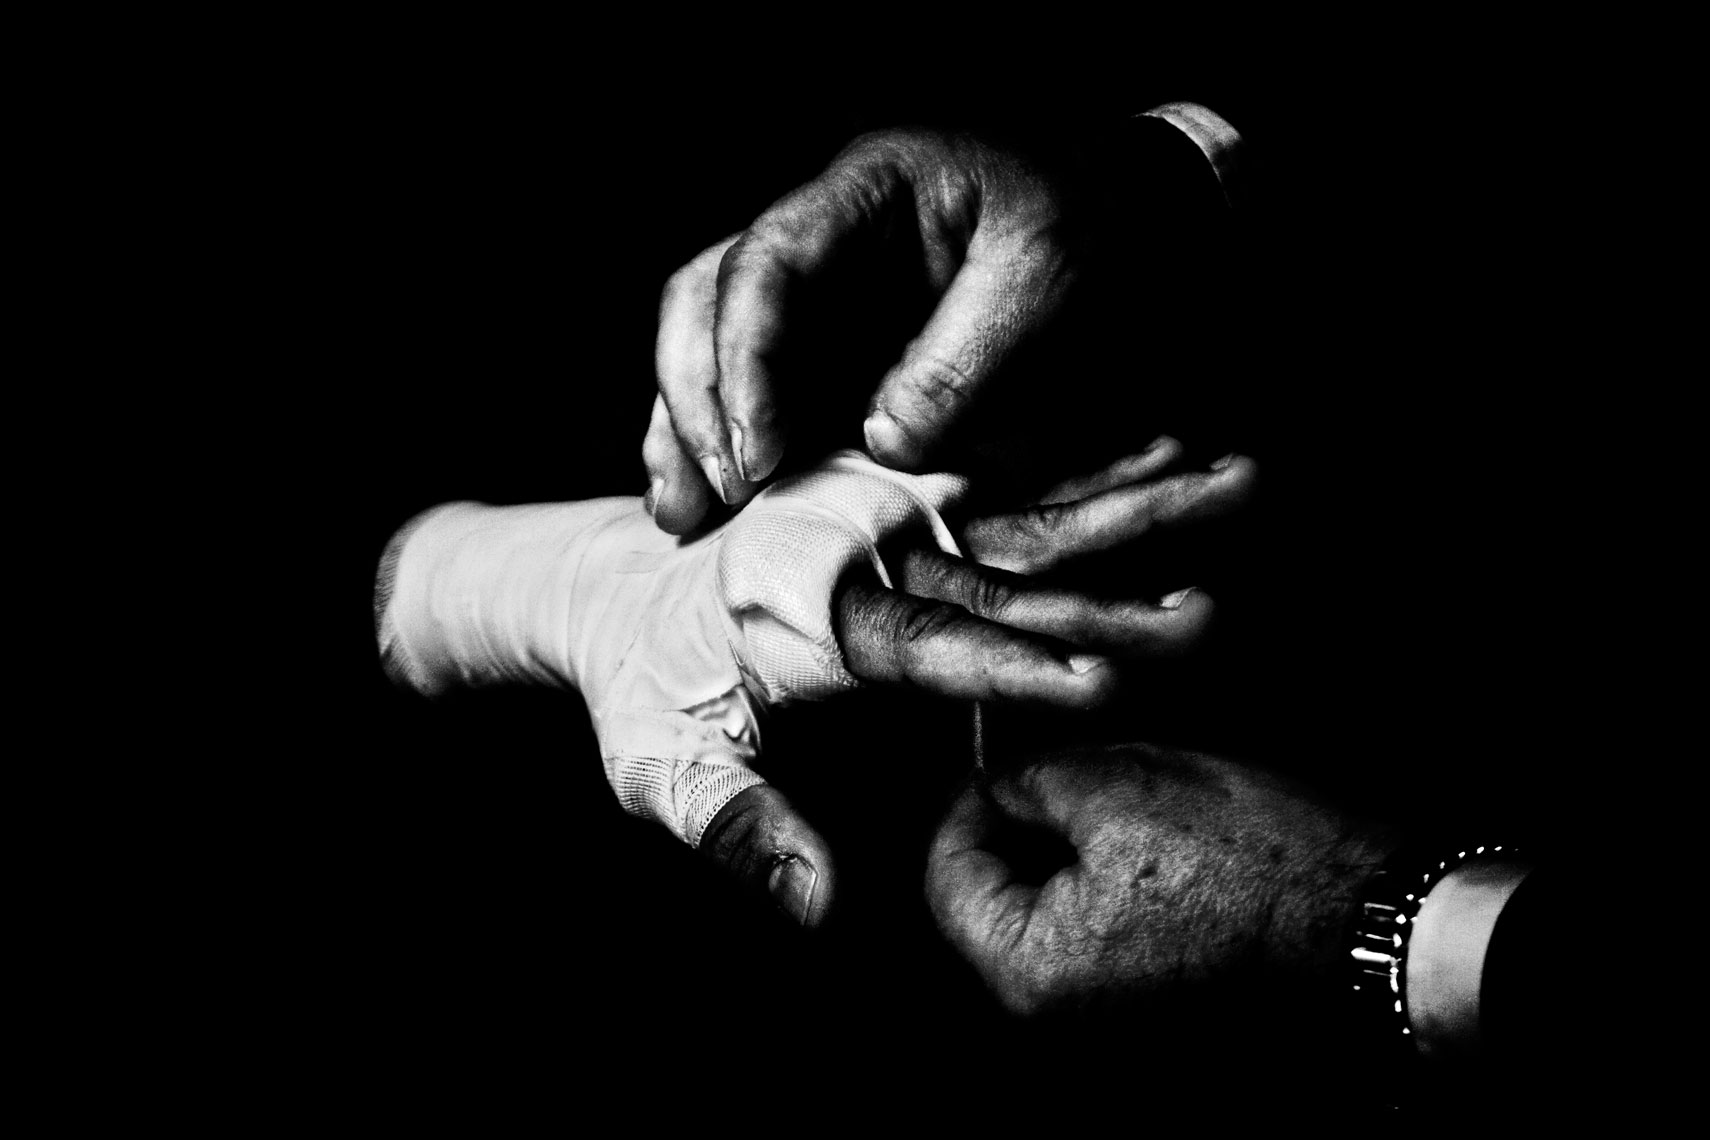 ITALY. Florence, 4th November 2011. Mandela Forum, the night of the match for the EBU (European Boxing Union) Welter Weight crown. Mr. Loreni, Leonard Bundu's agent, bandages athlete's hands.